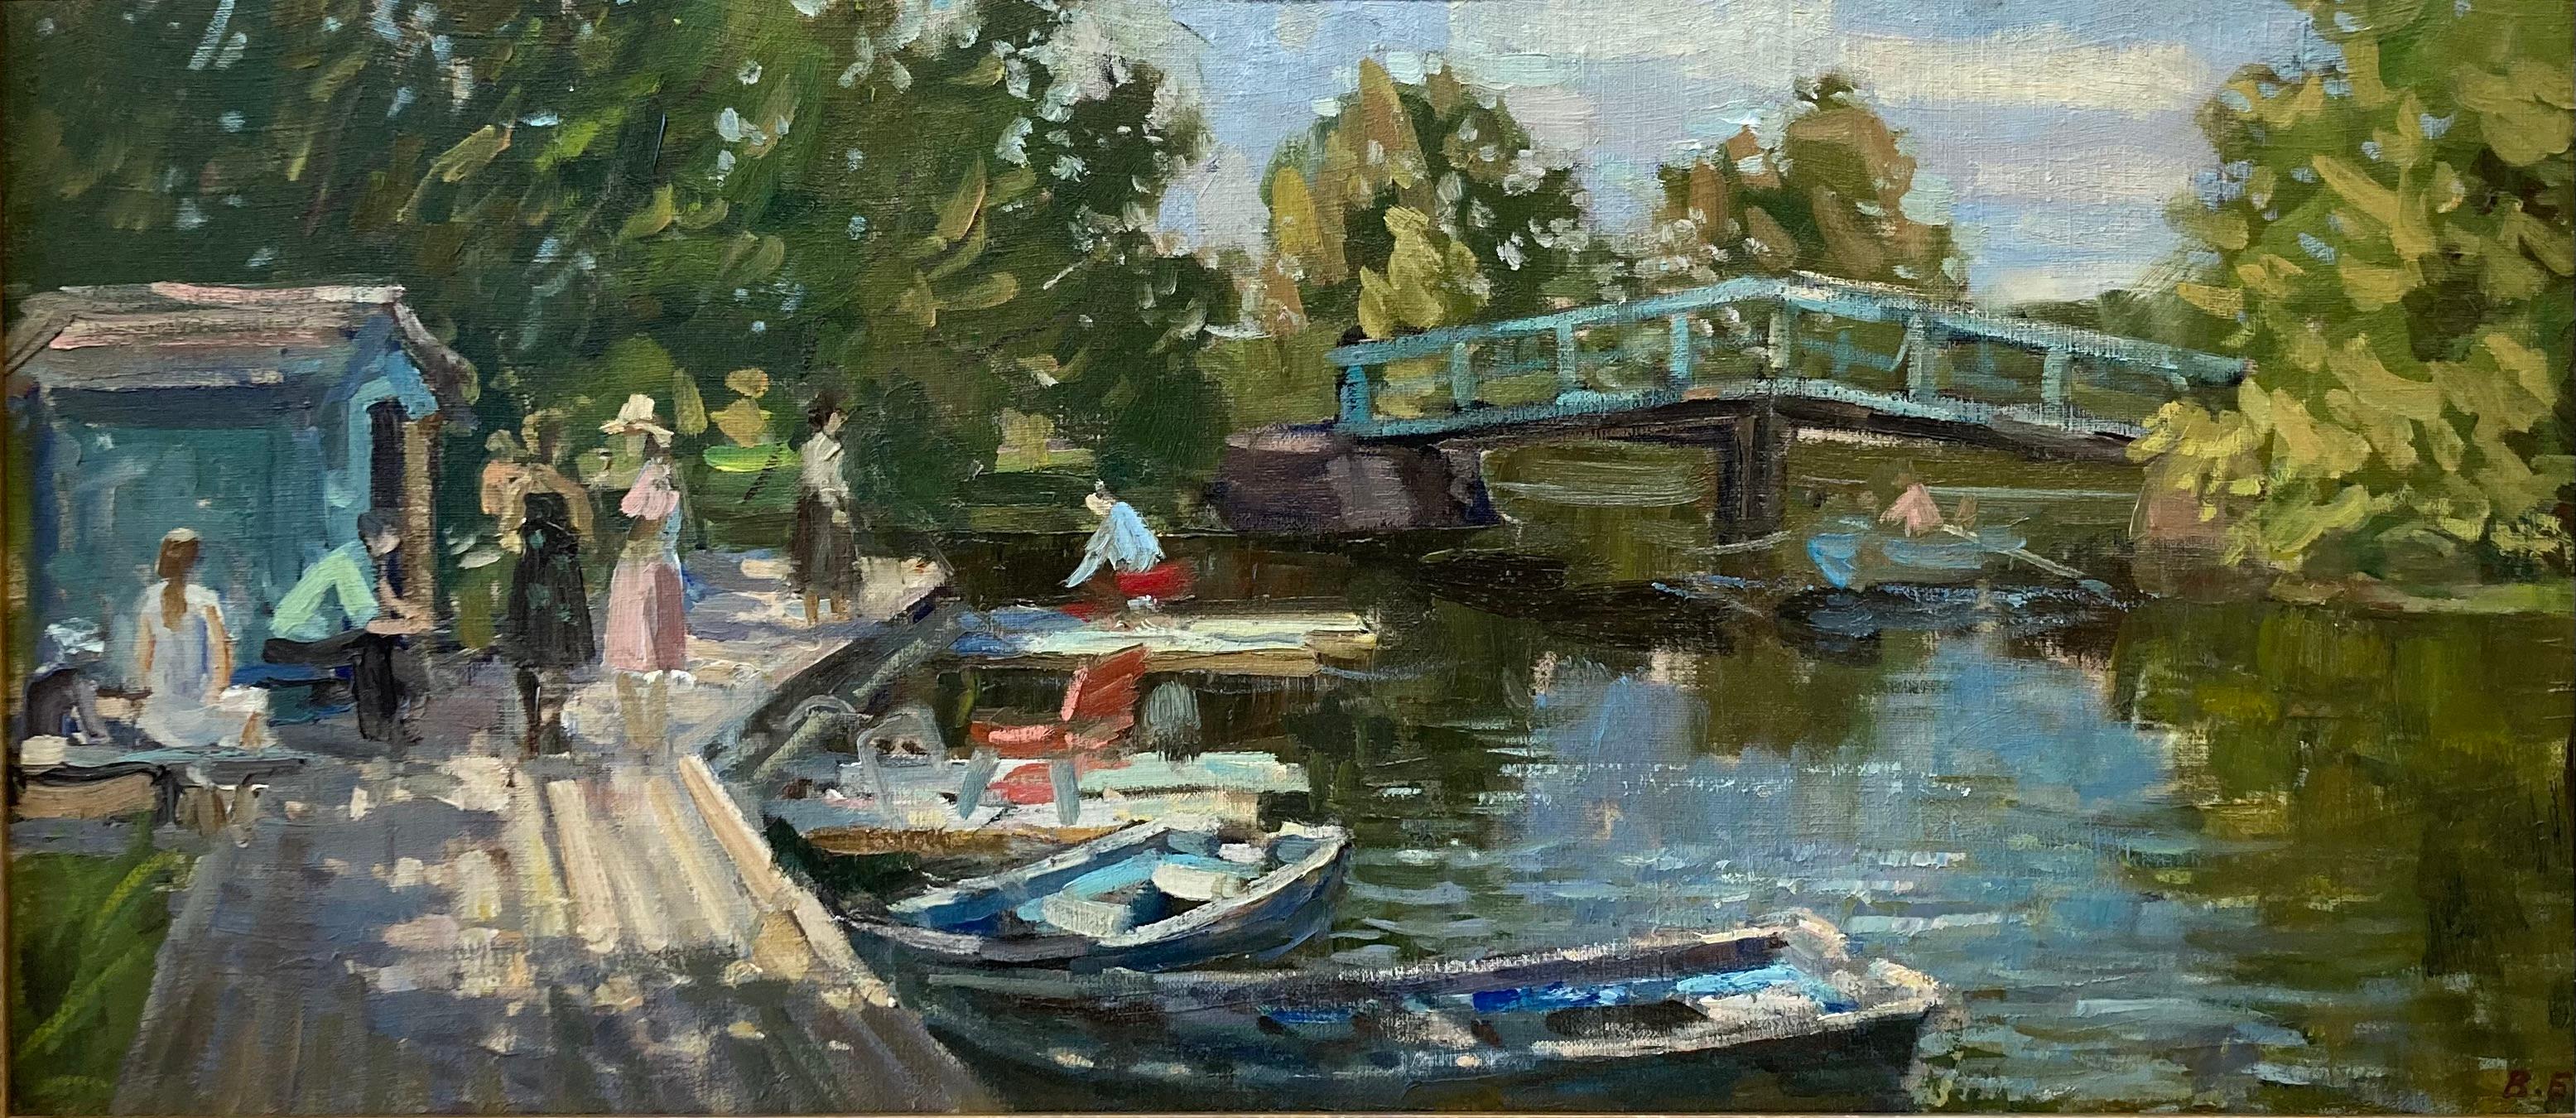 Still-Life Painting Viktor Butko - Summer on the Canal - 1999, peinture à l'huile impressionniste